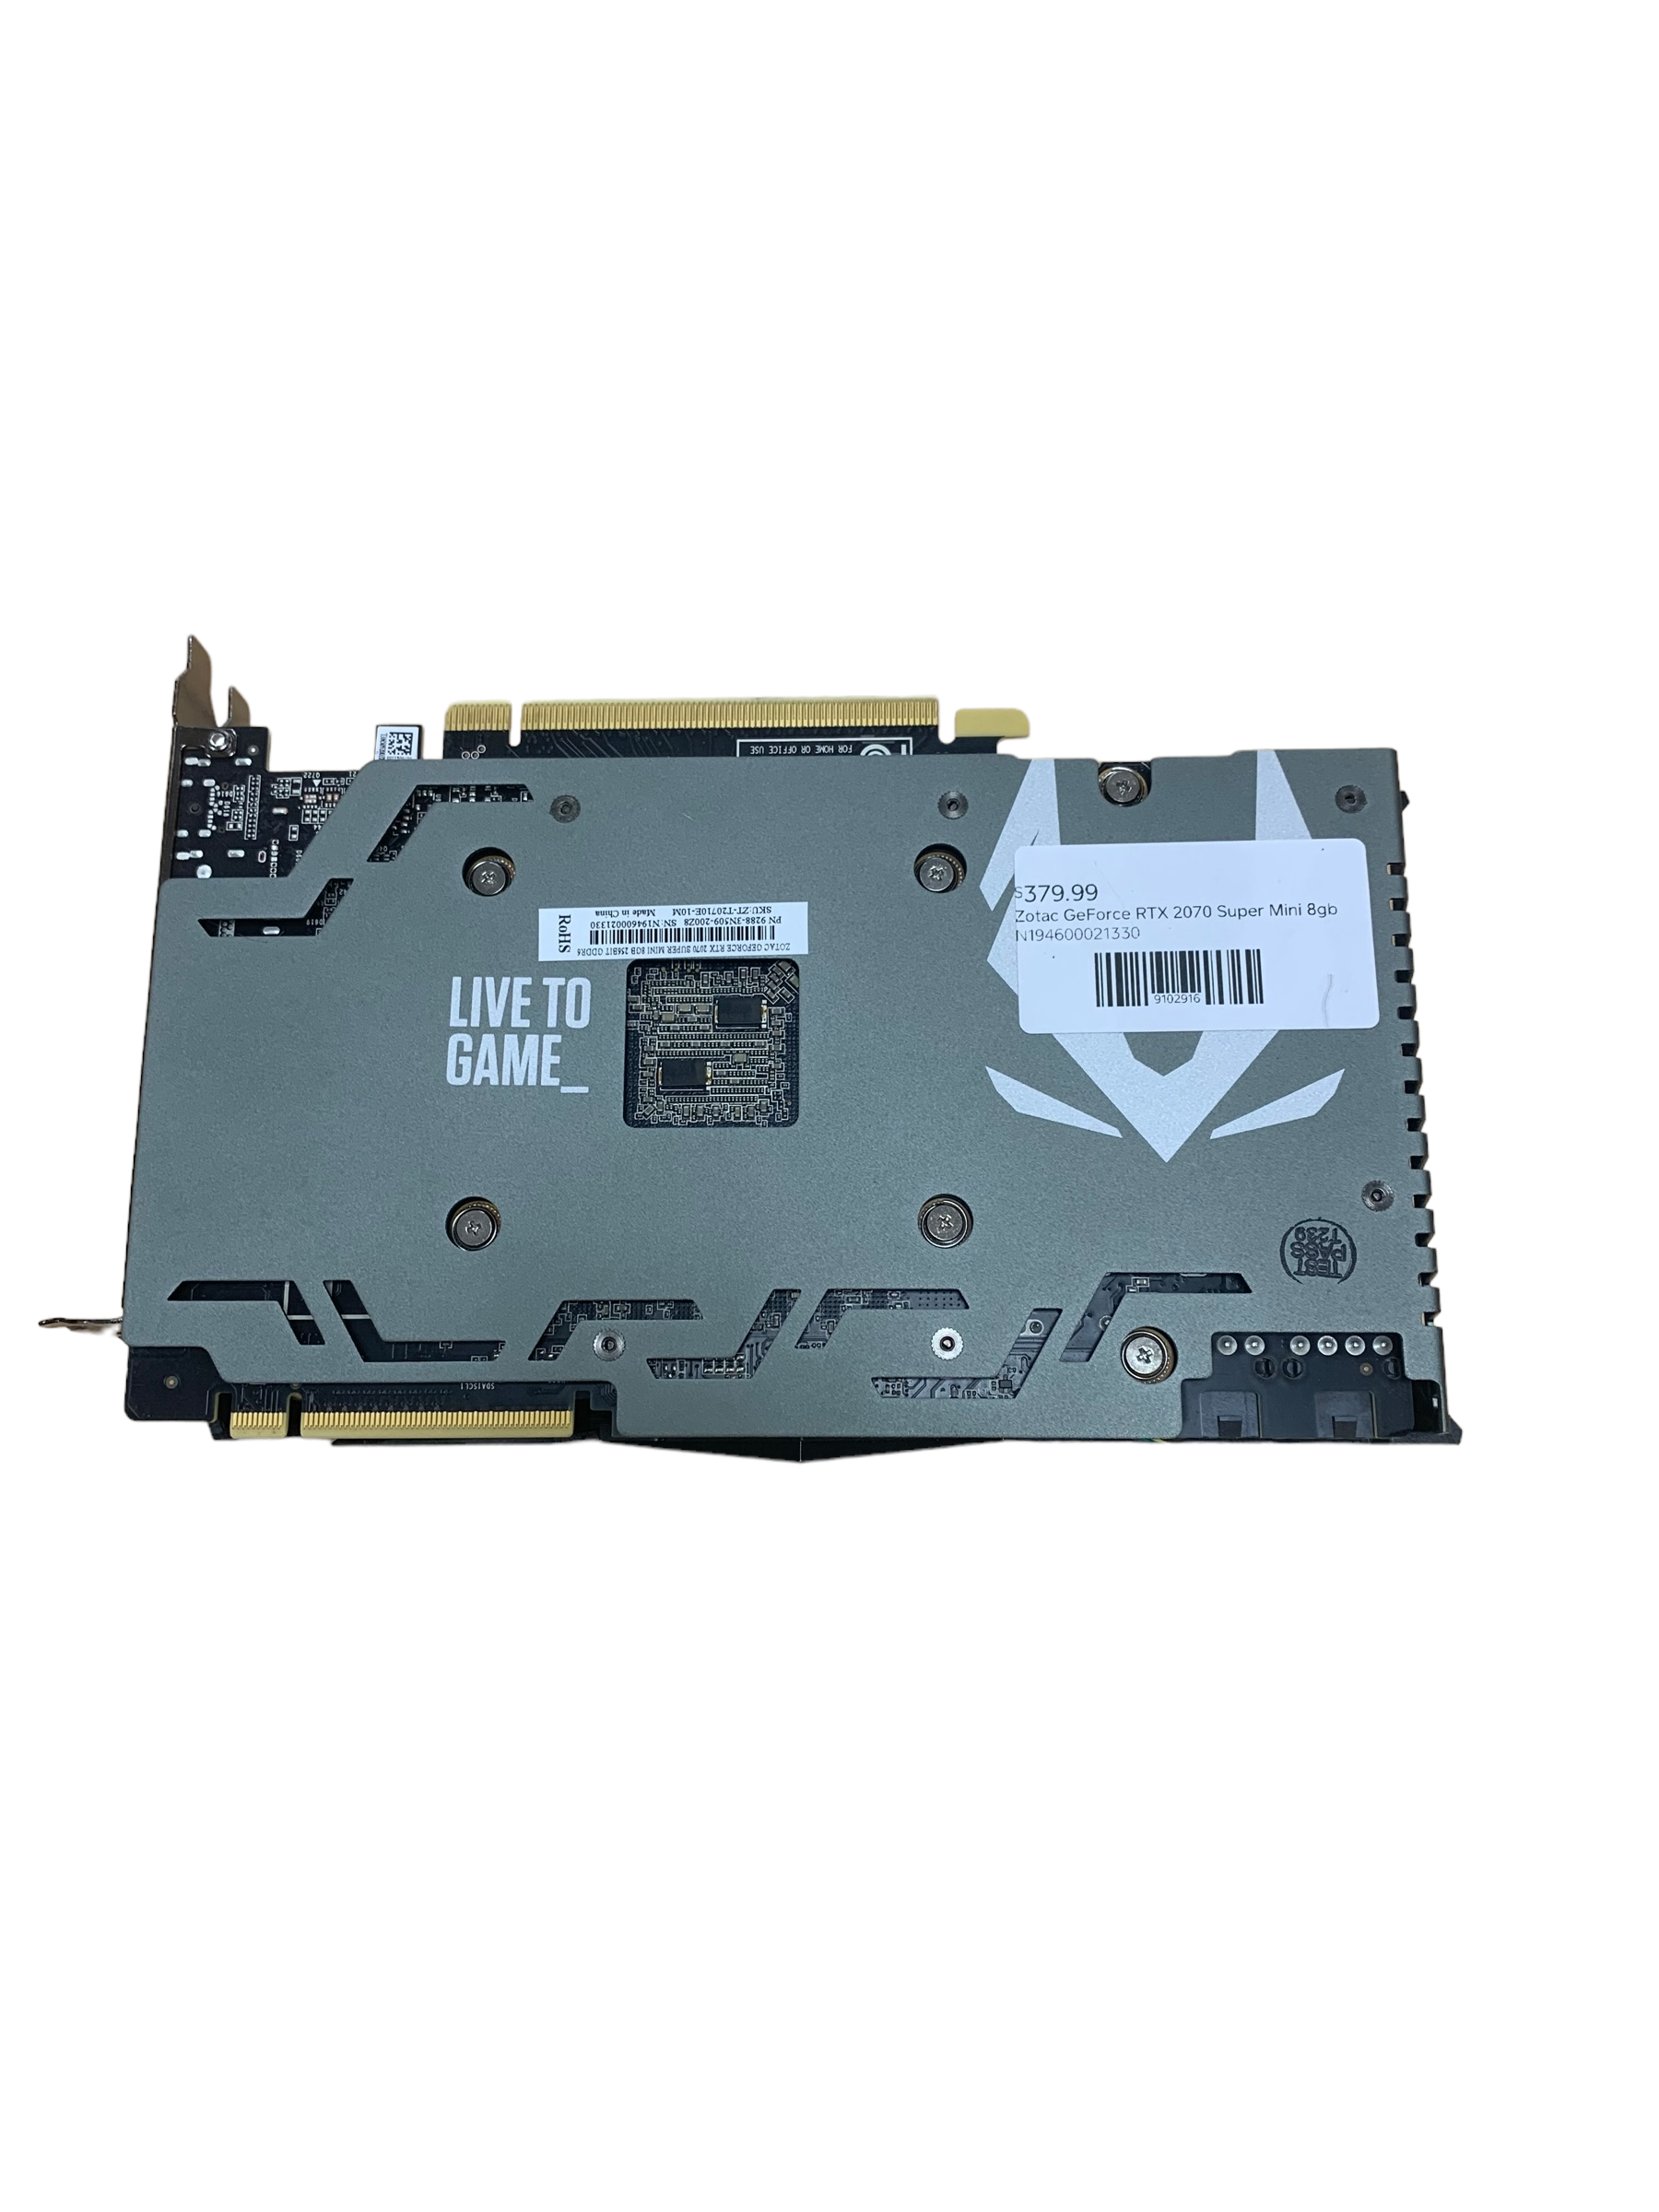 Zotac GeForce RTX 2070 Super Mini 8gb